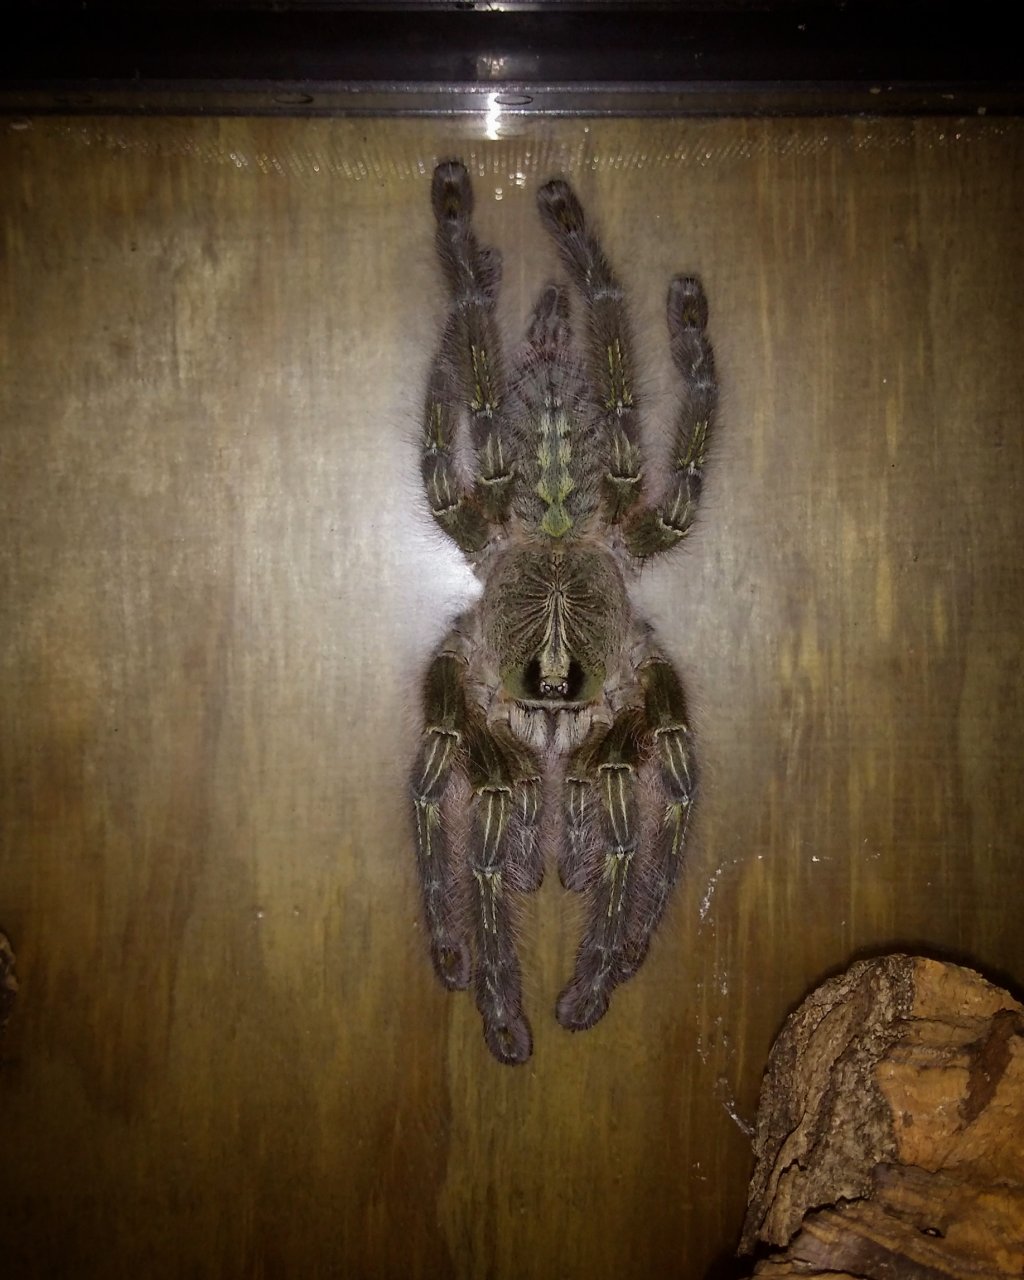 Queen of the spider room